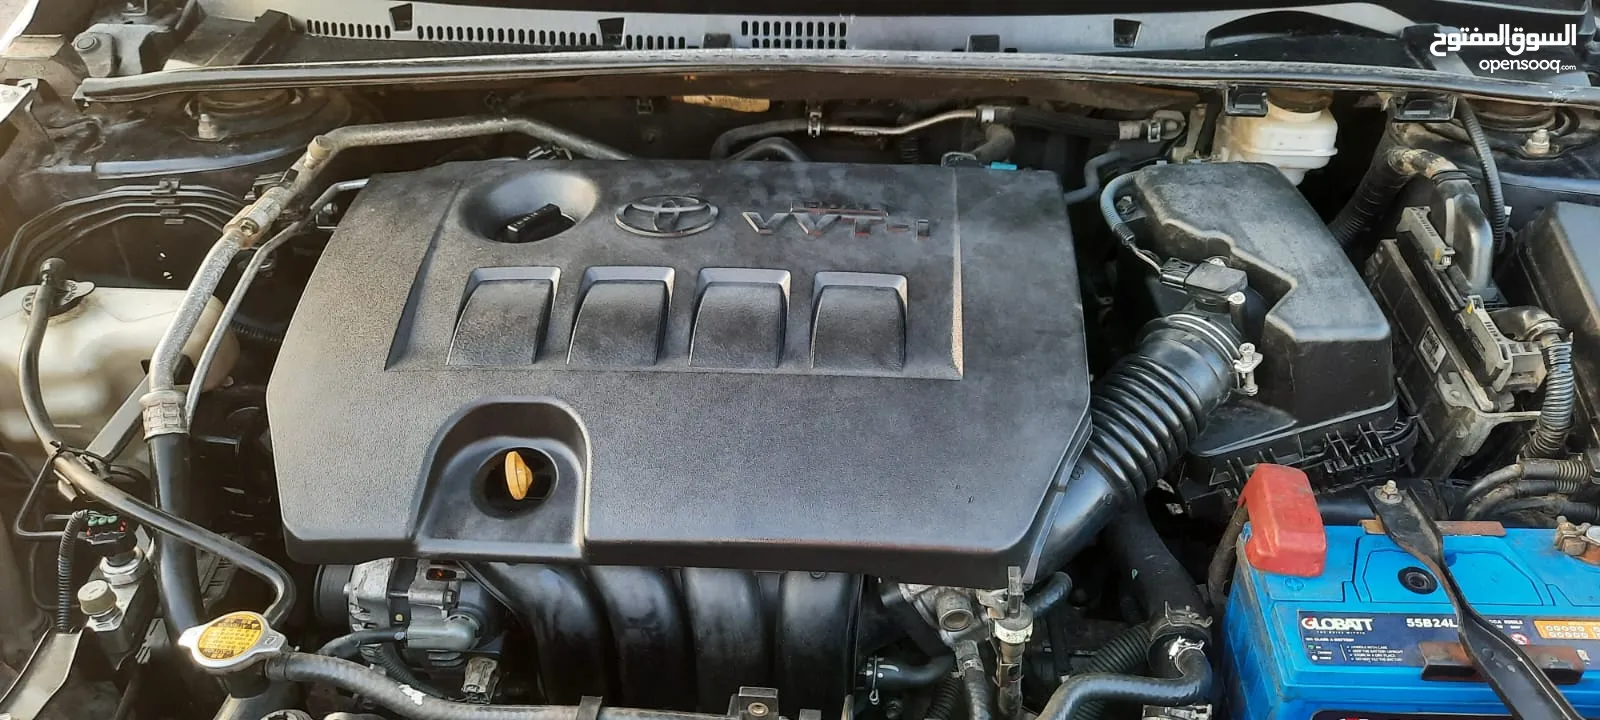 Toyota Corolla 1.6 engine 2015 good condition